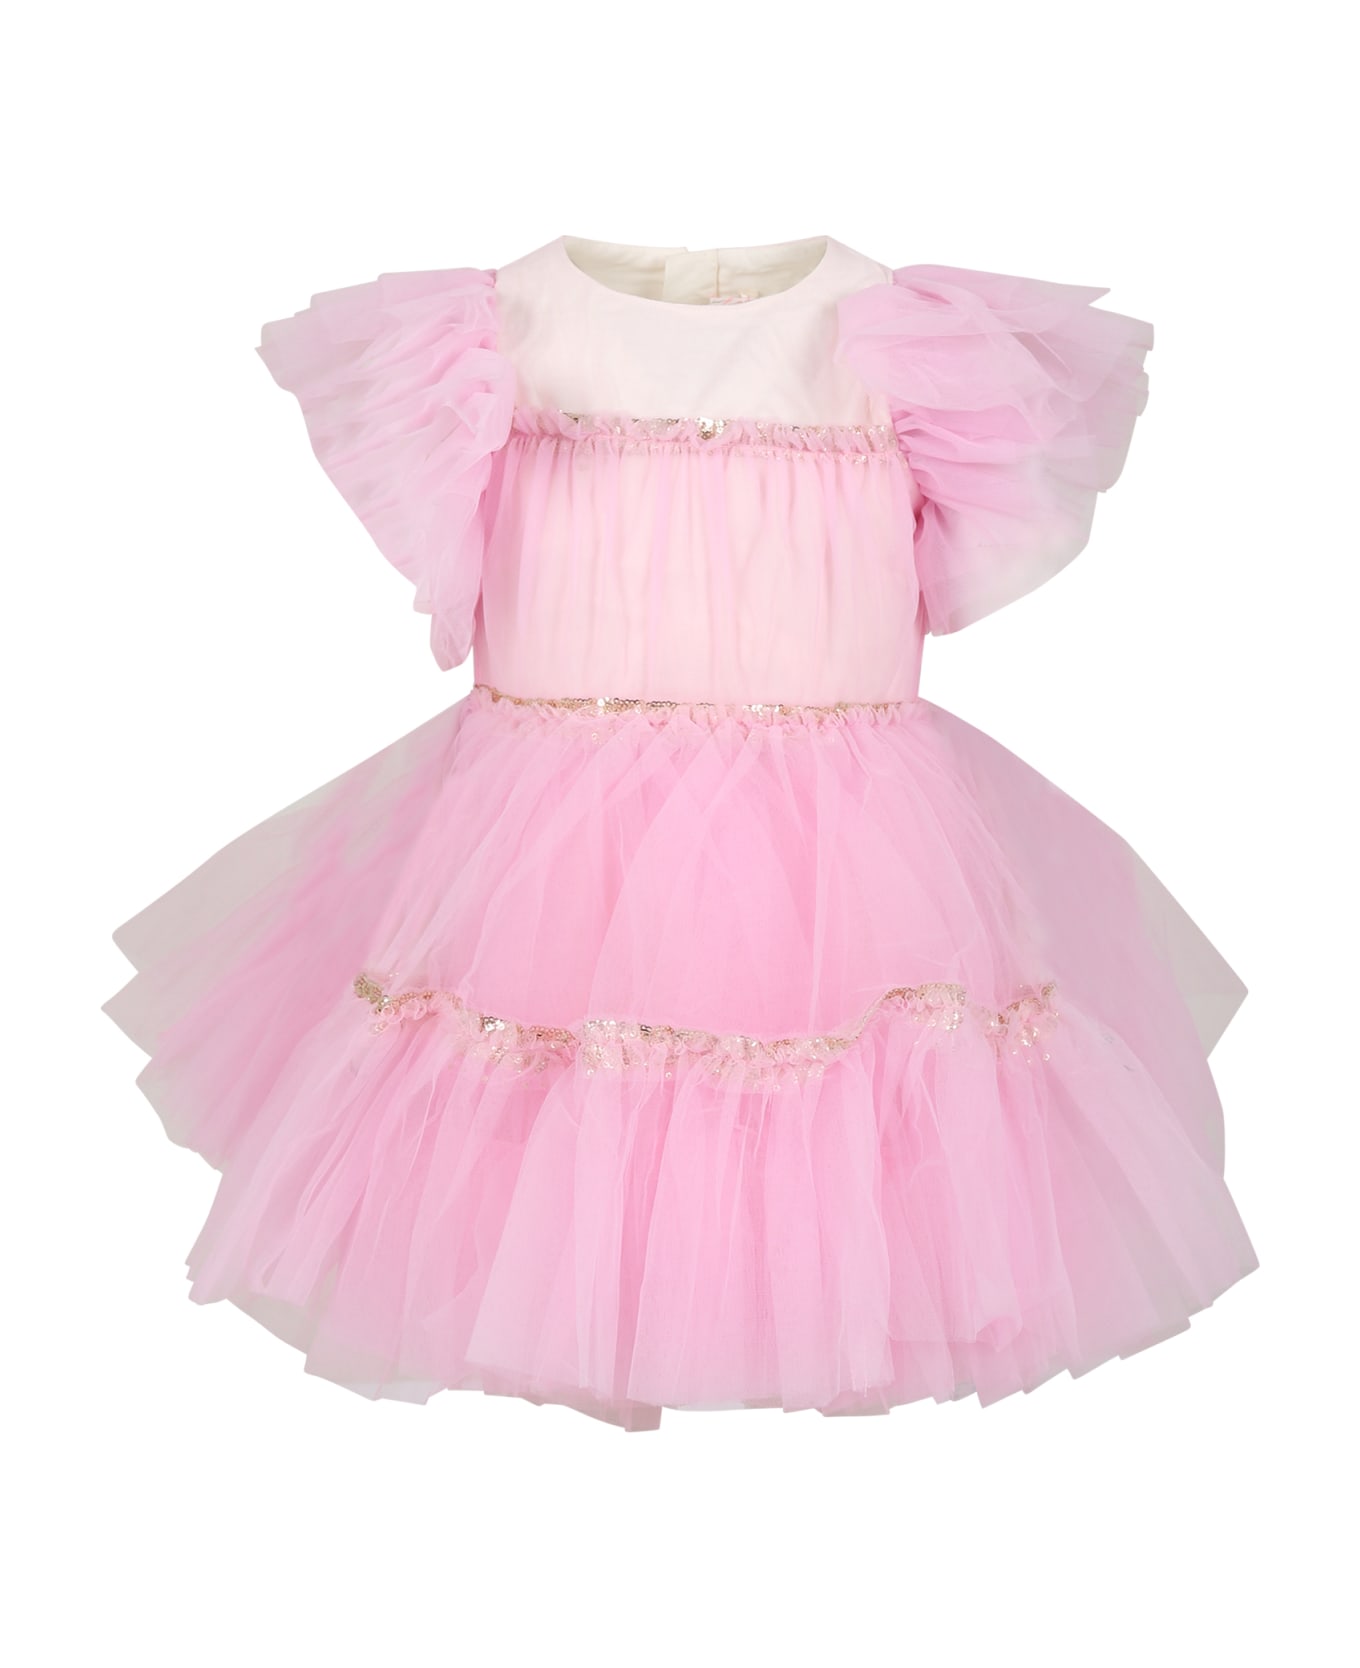 Billieblush Pink Tulle Dress For Girl - Pink